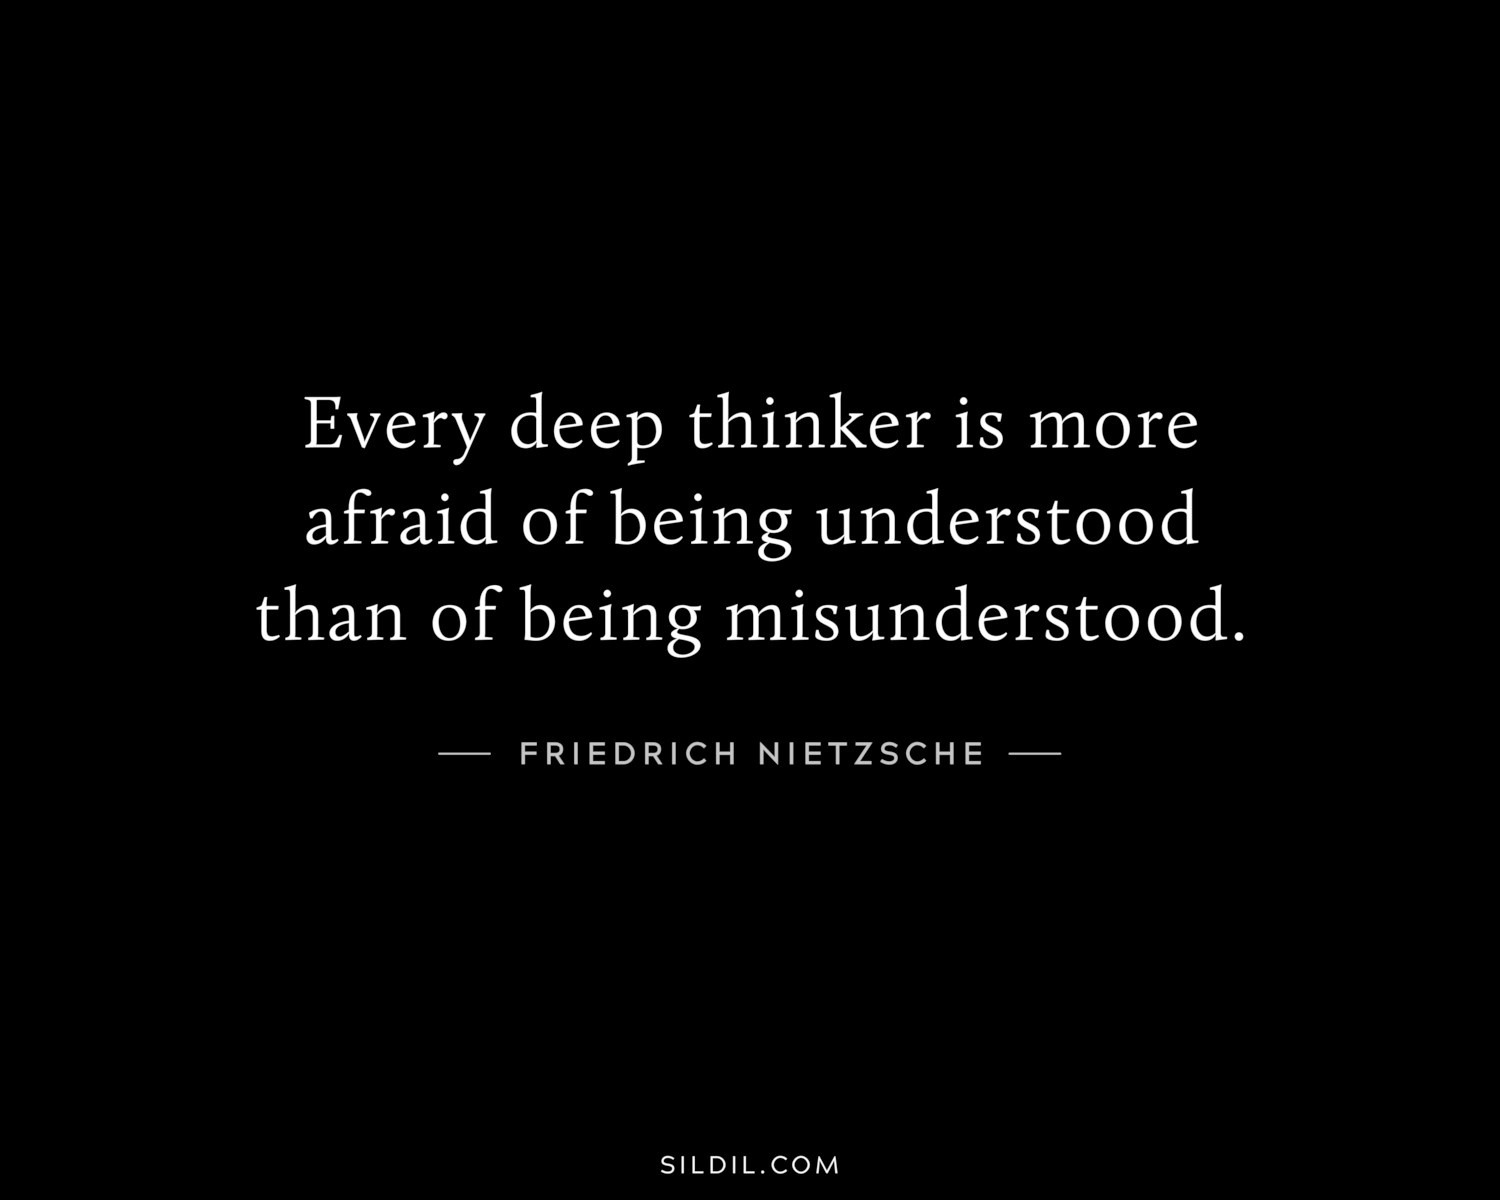 Every deep thinker is more afraid of being understood than of being misunderstood.